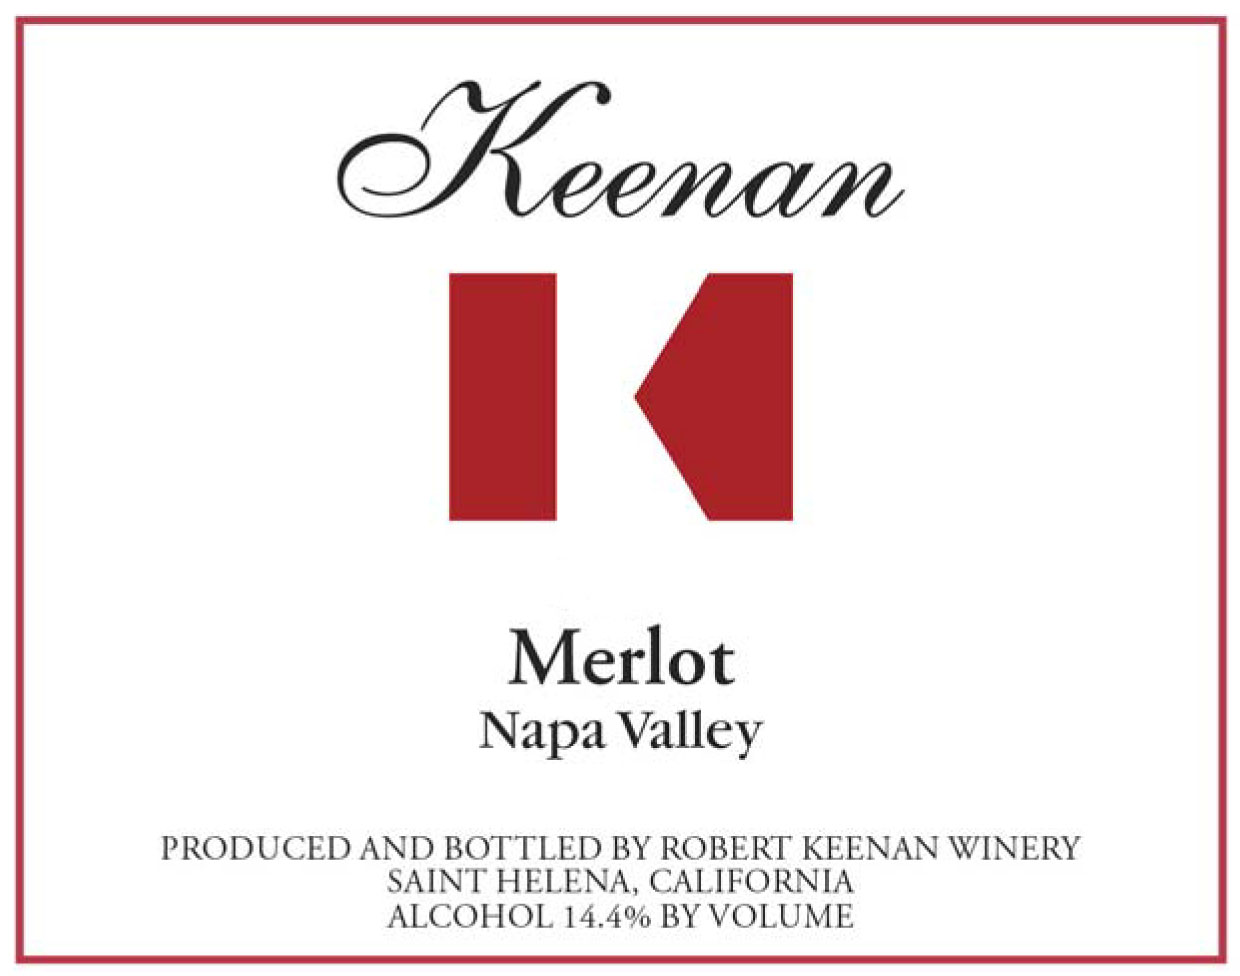 Keenan - Merlot label